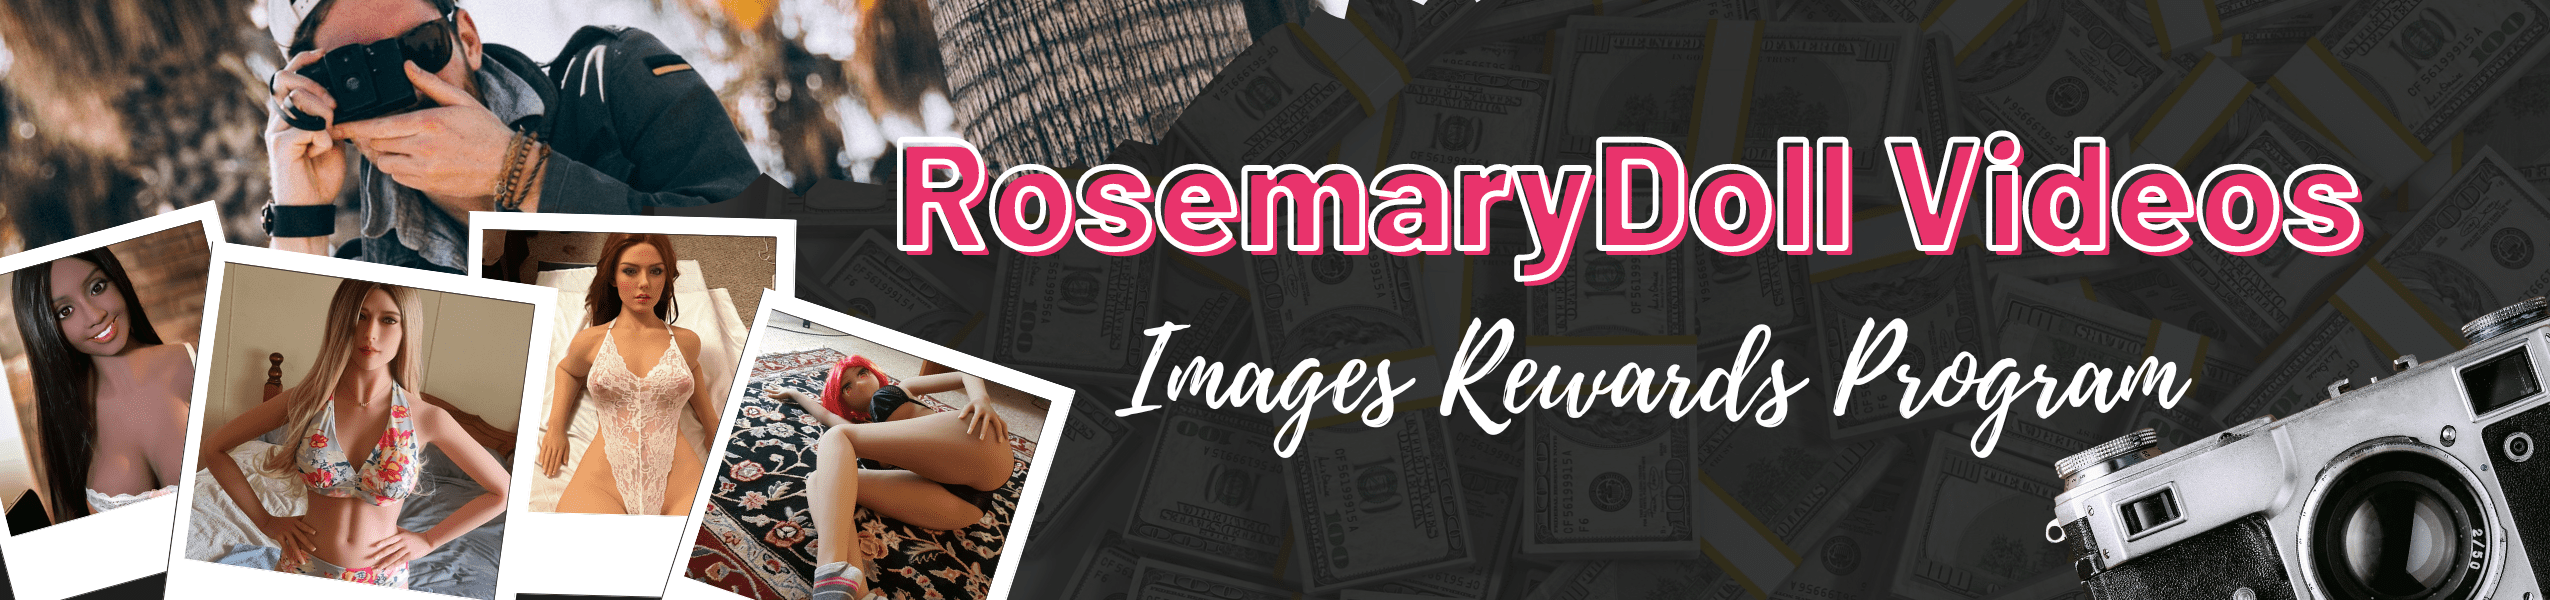 RosemaryDoll Video & Image Rewards Program